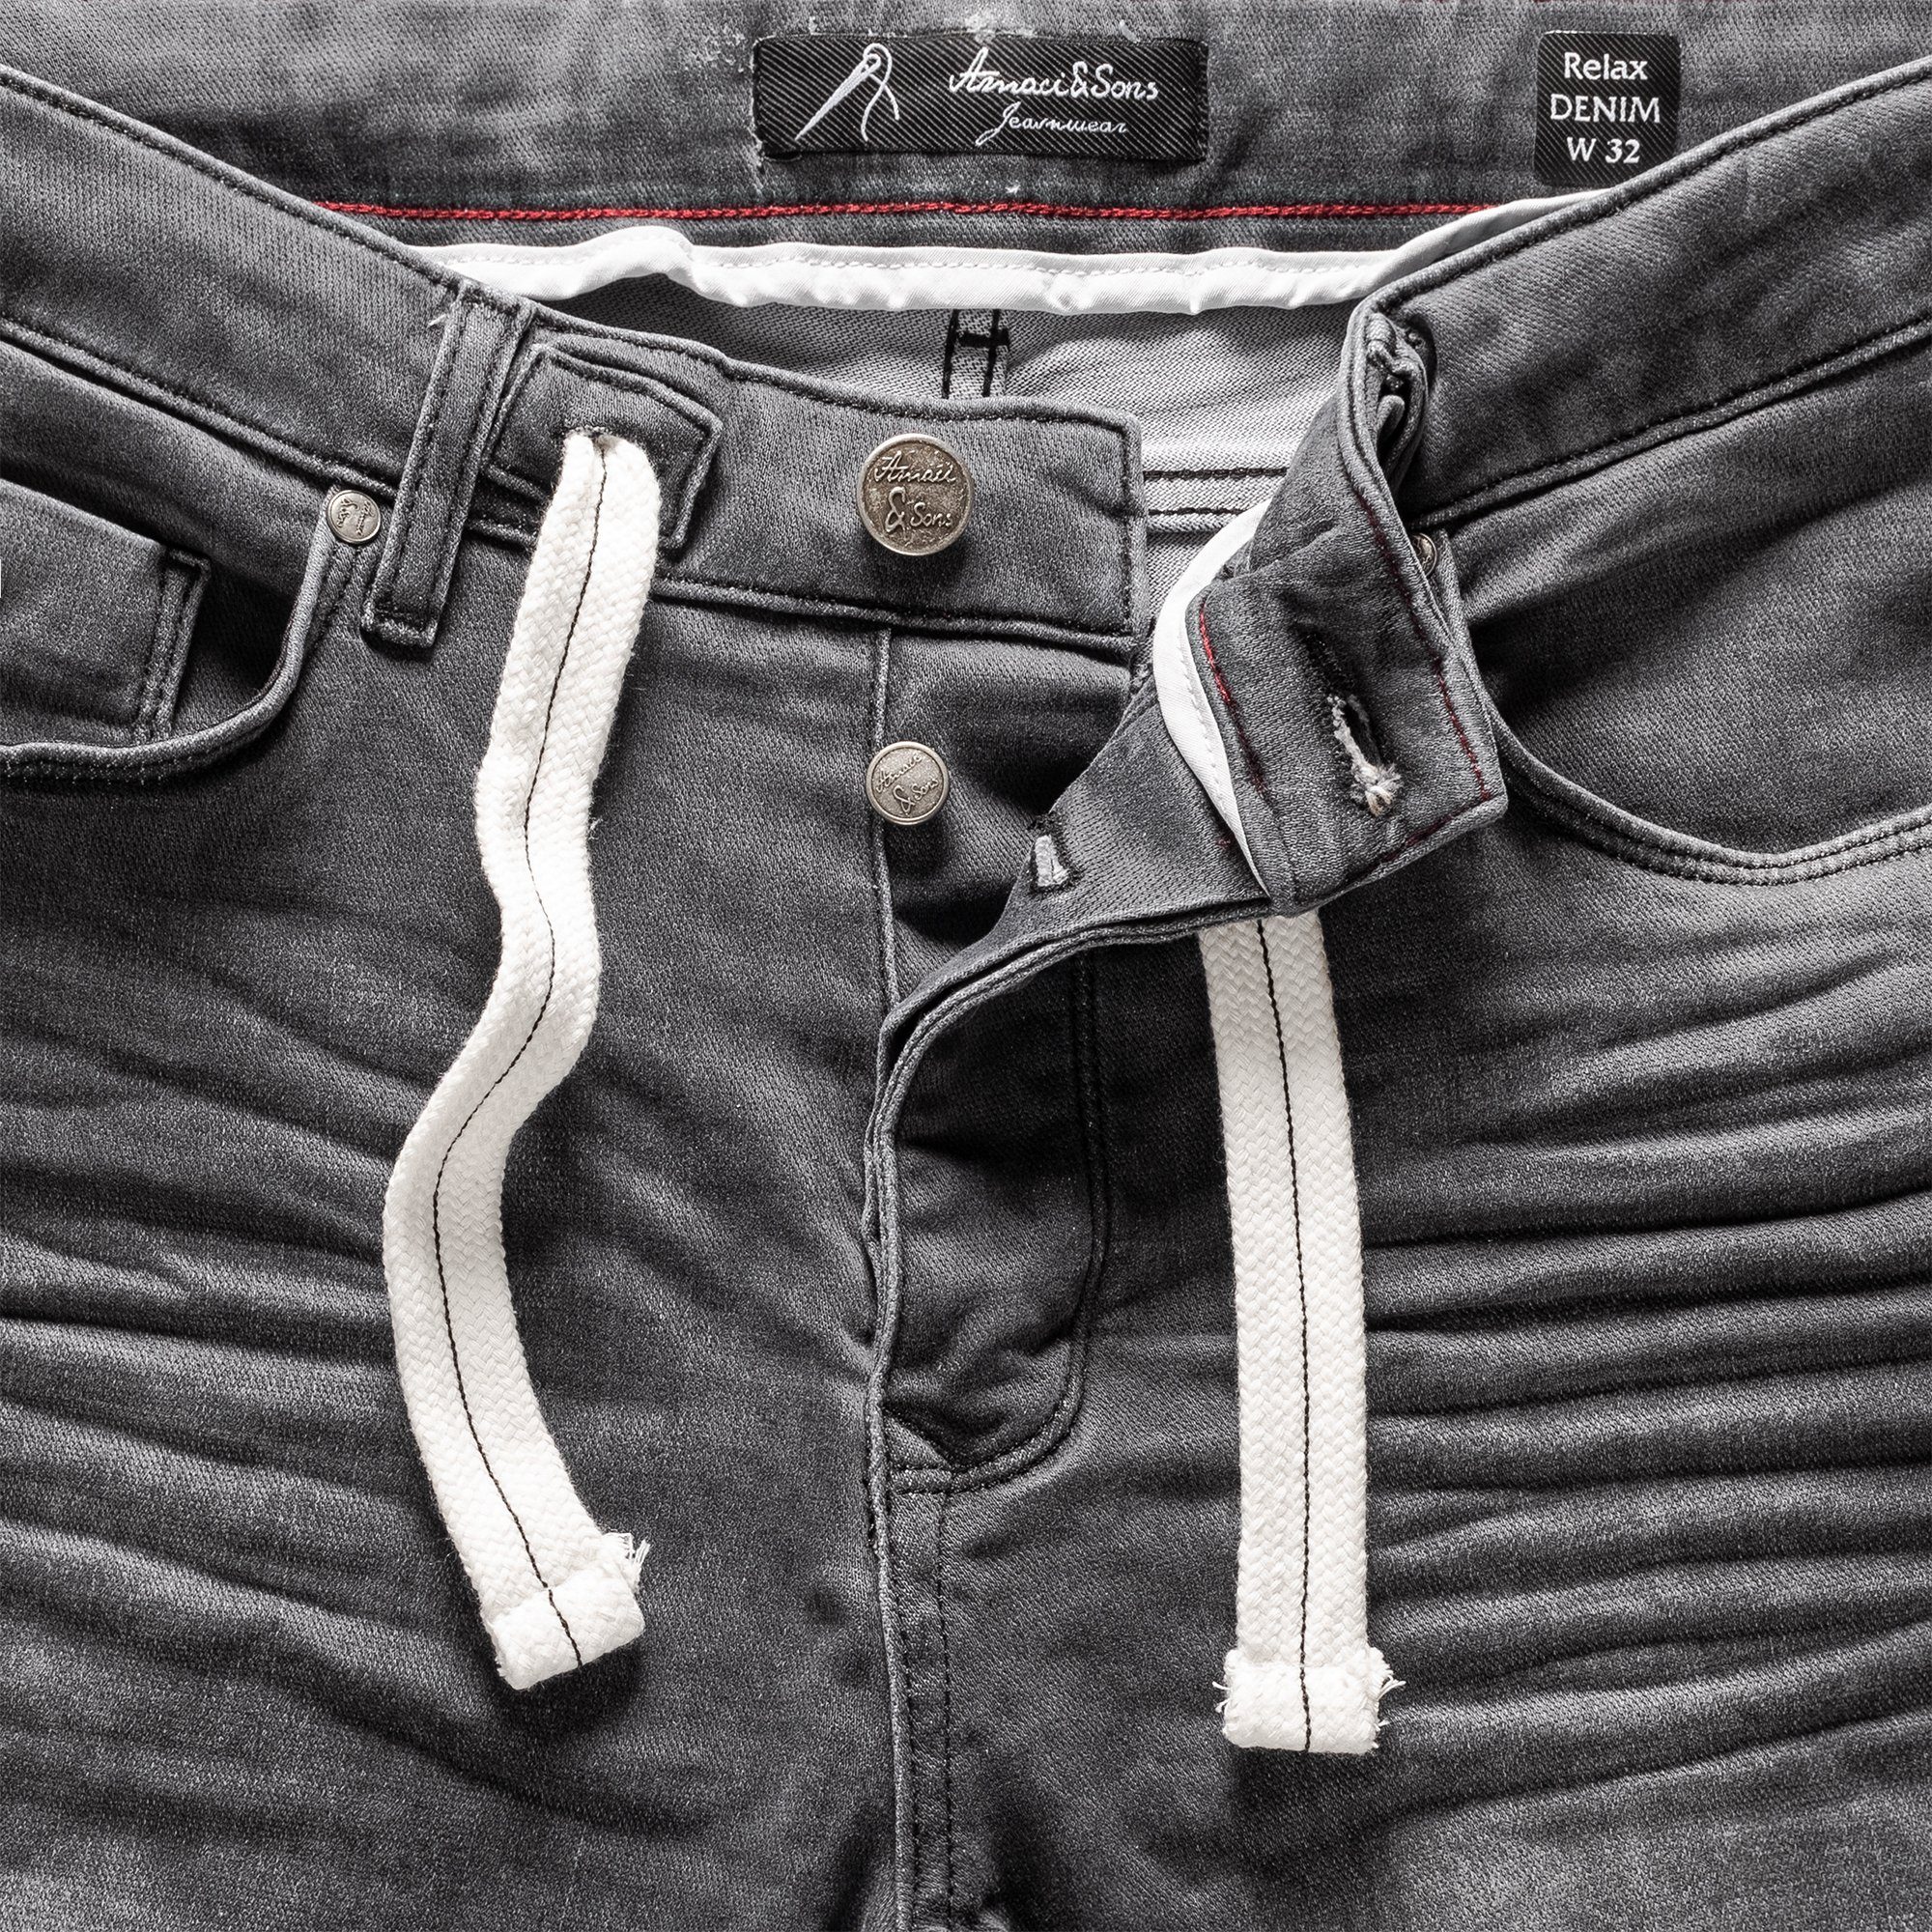 Amaci&Sons Jeansshorts SAN Shorts Jeans Destroyed Grau JOSE